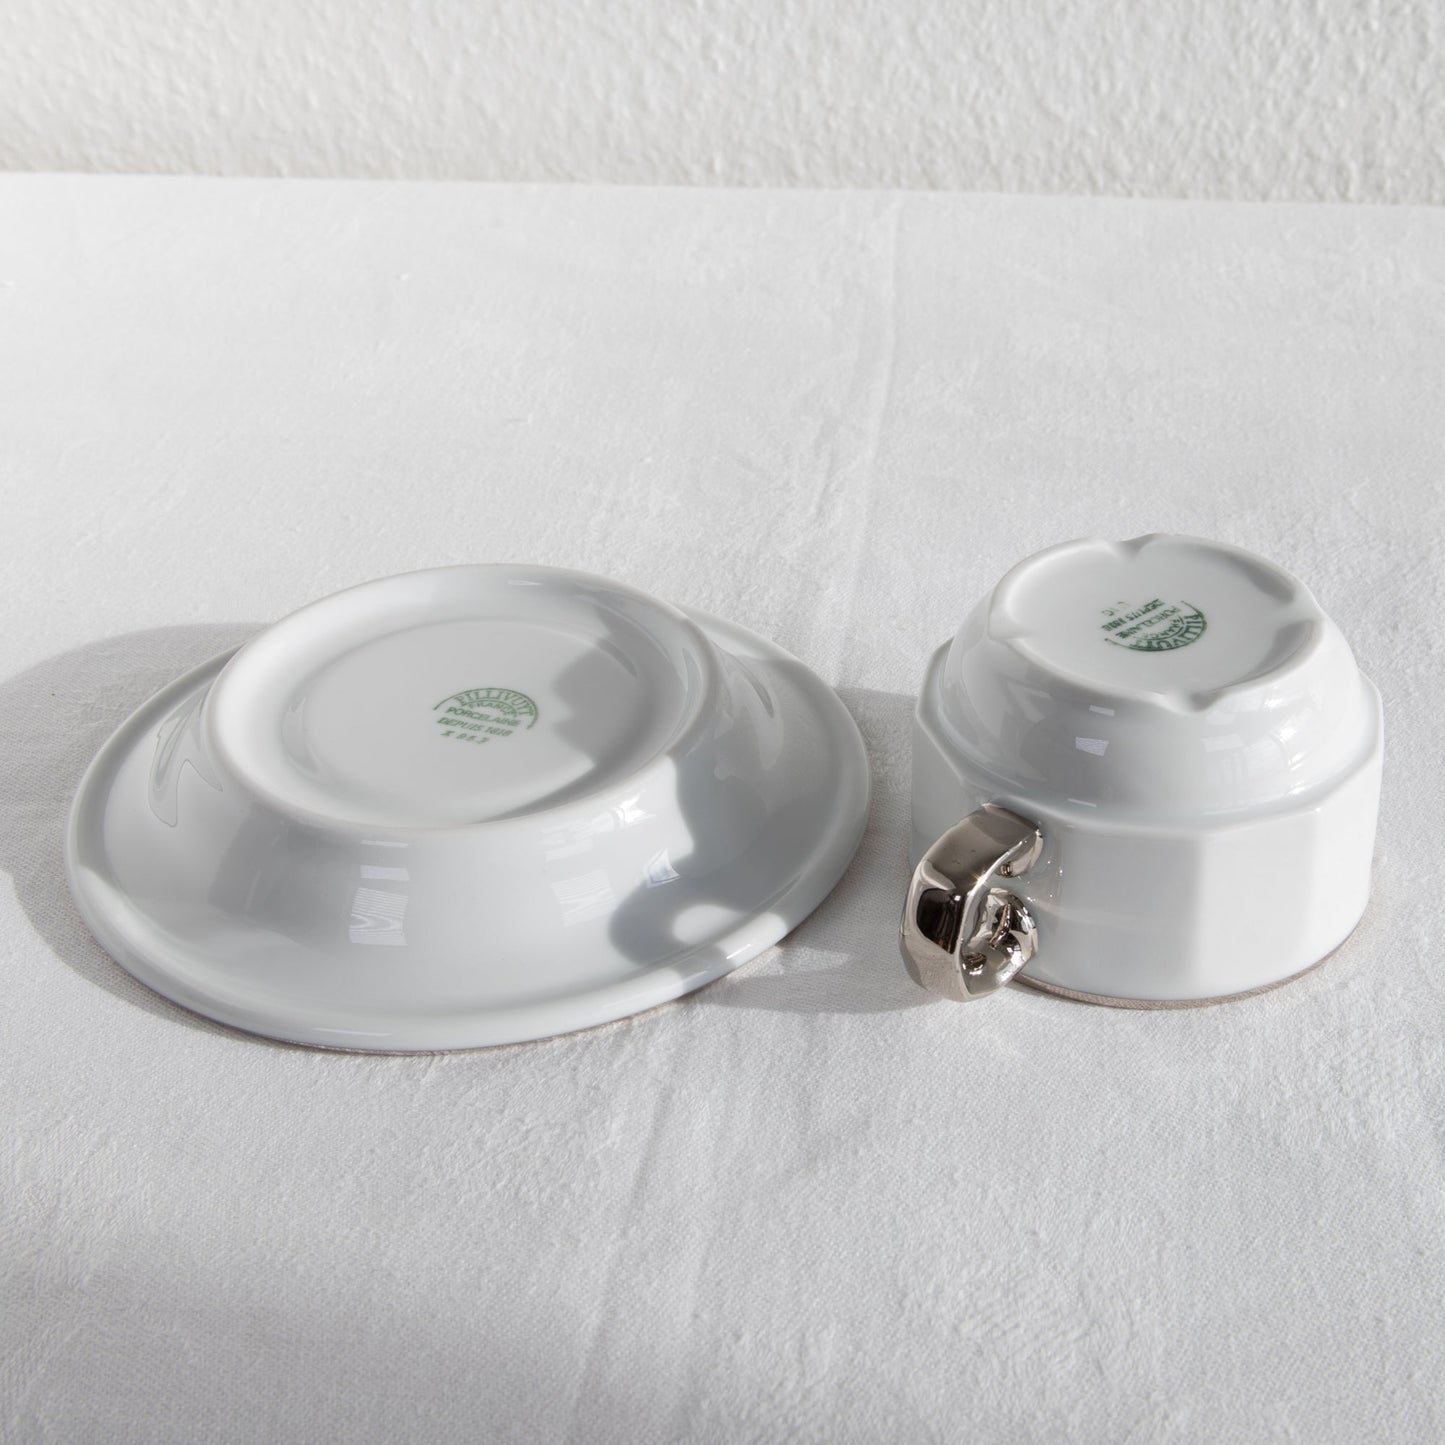 6 x Pillivuyt Bistro Tableware Porcelain Coffee Cup + Saucer Mollaris.com 